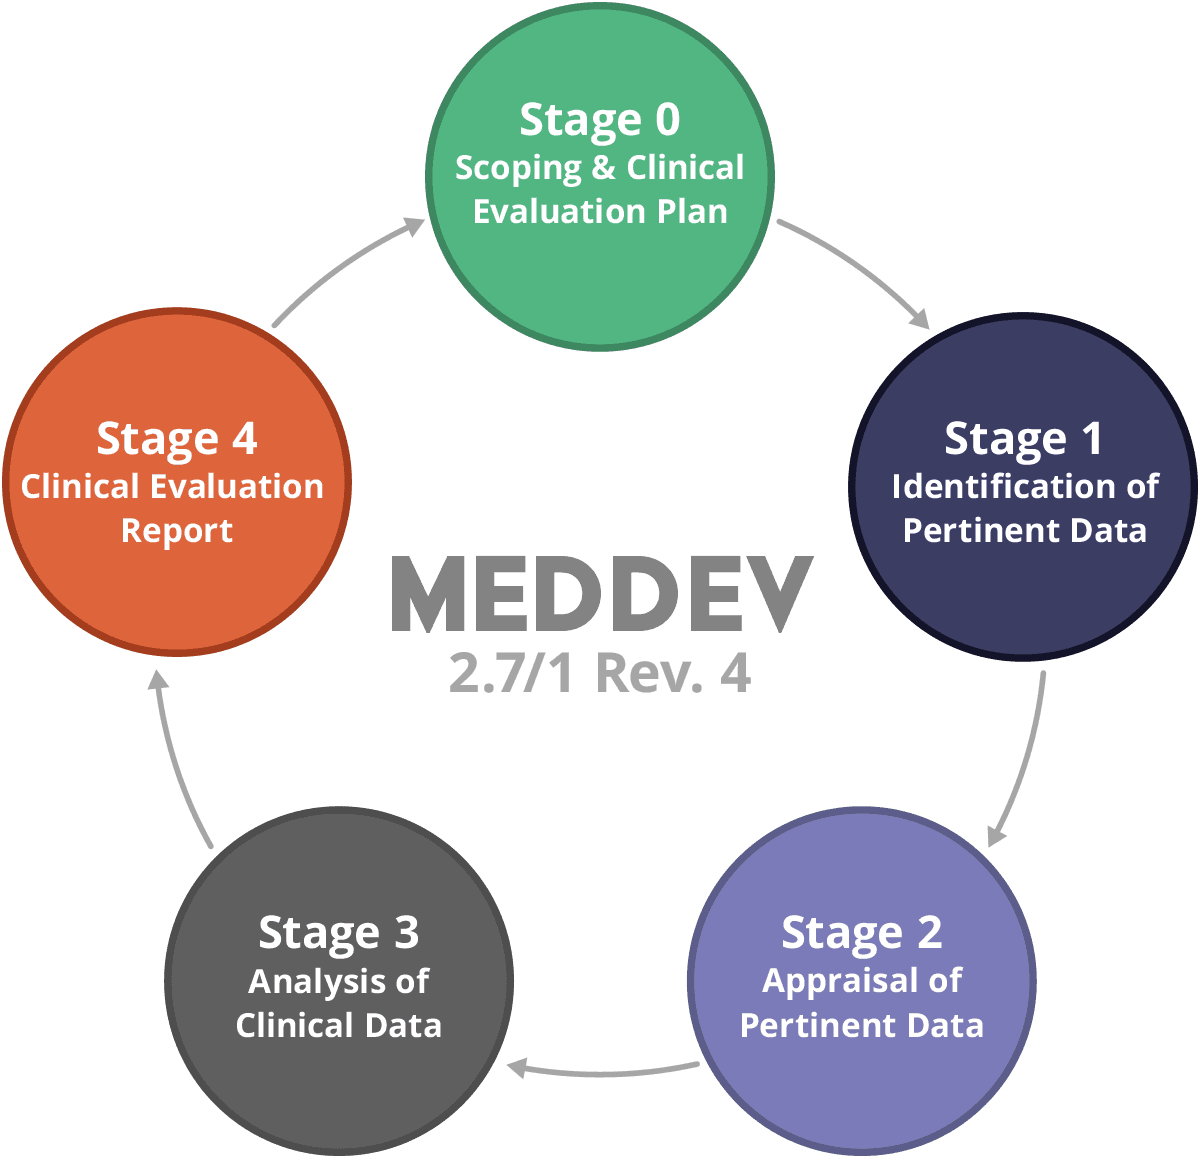 What is MEDDEV 2.7/1 Rev. 4